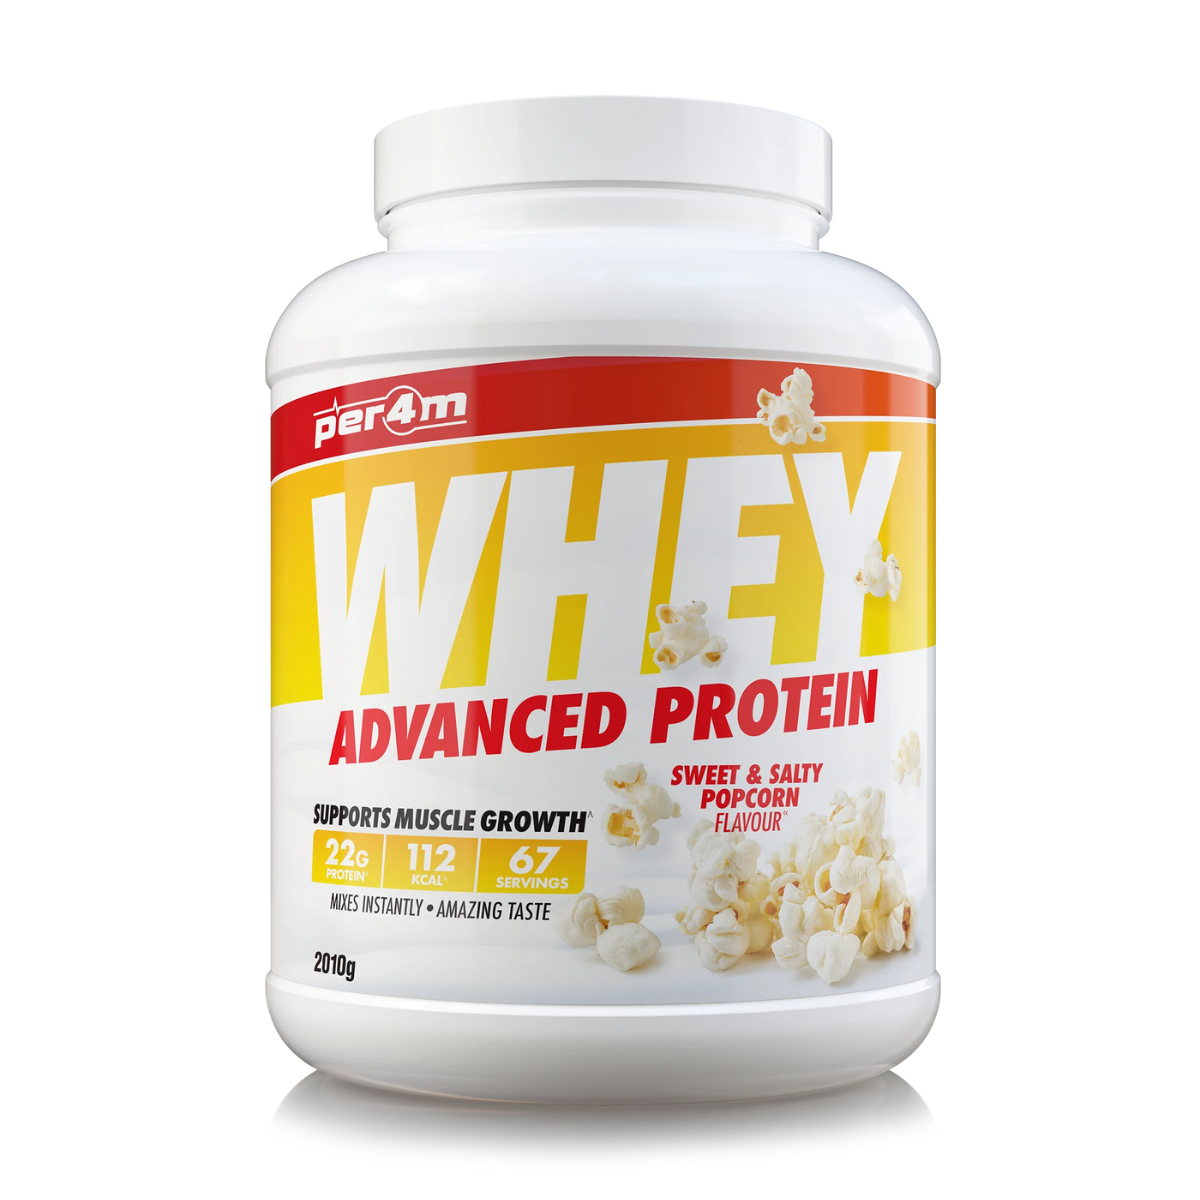 Per4m Nutrition Whey Advanced Protein